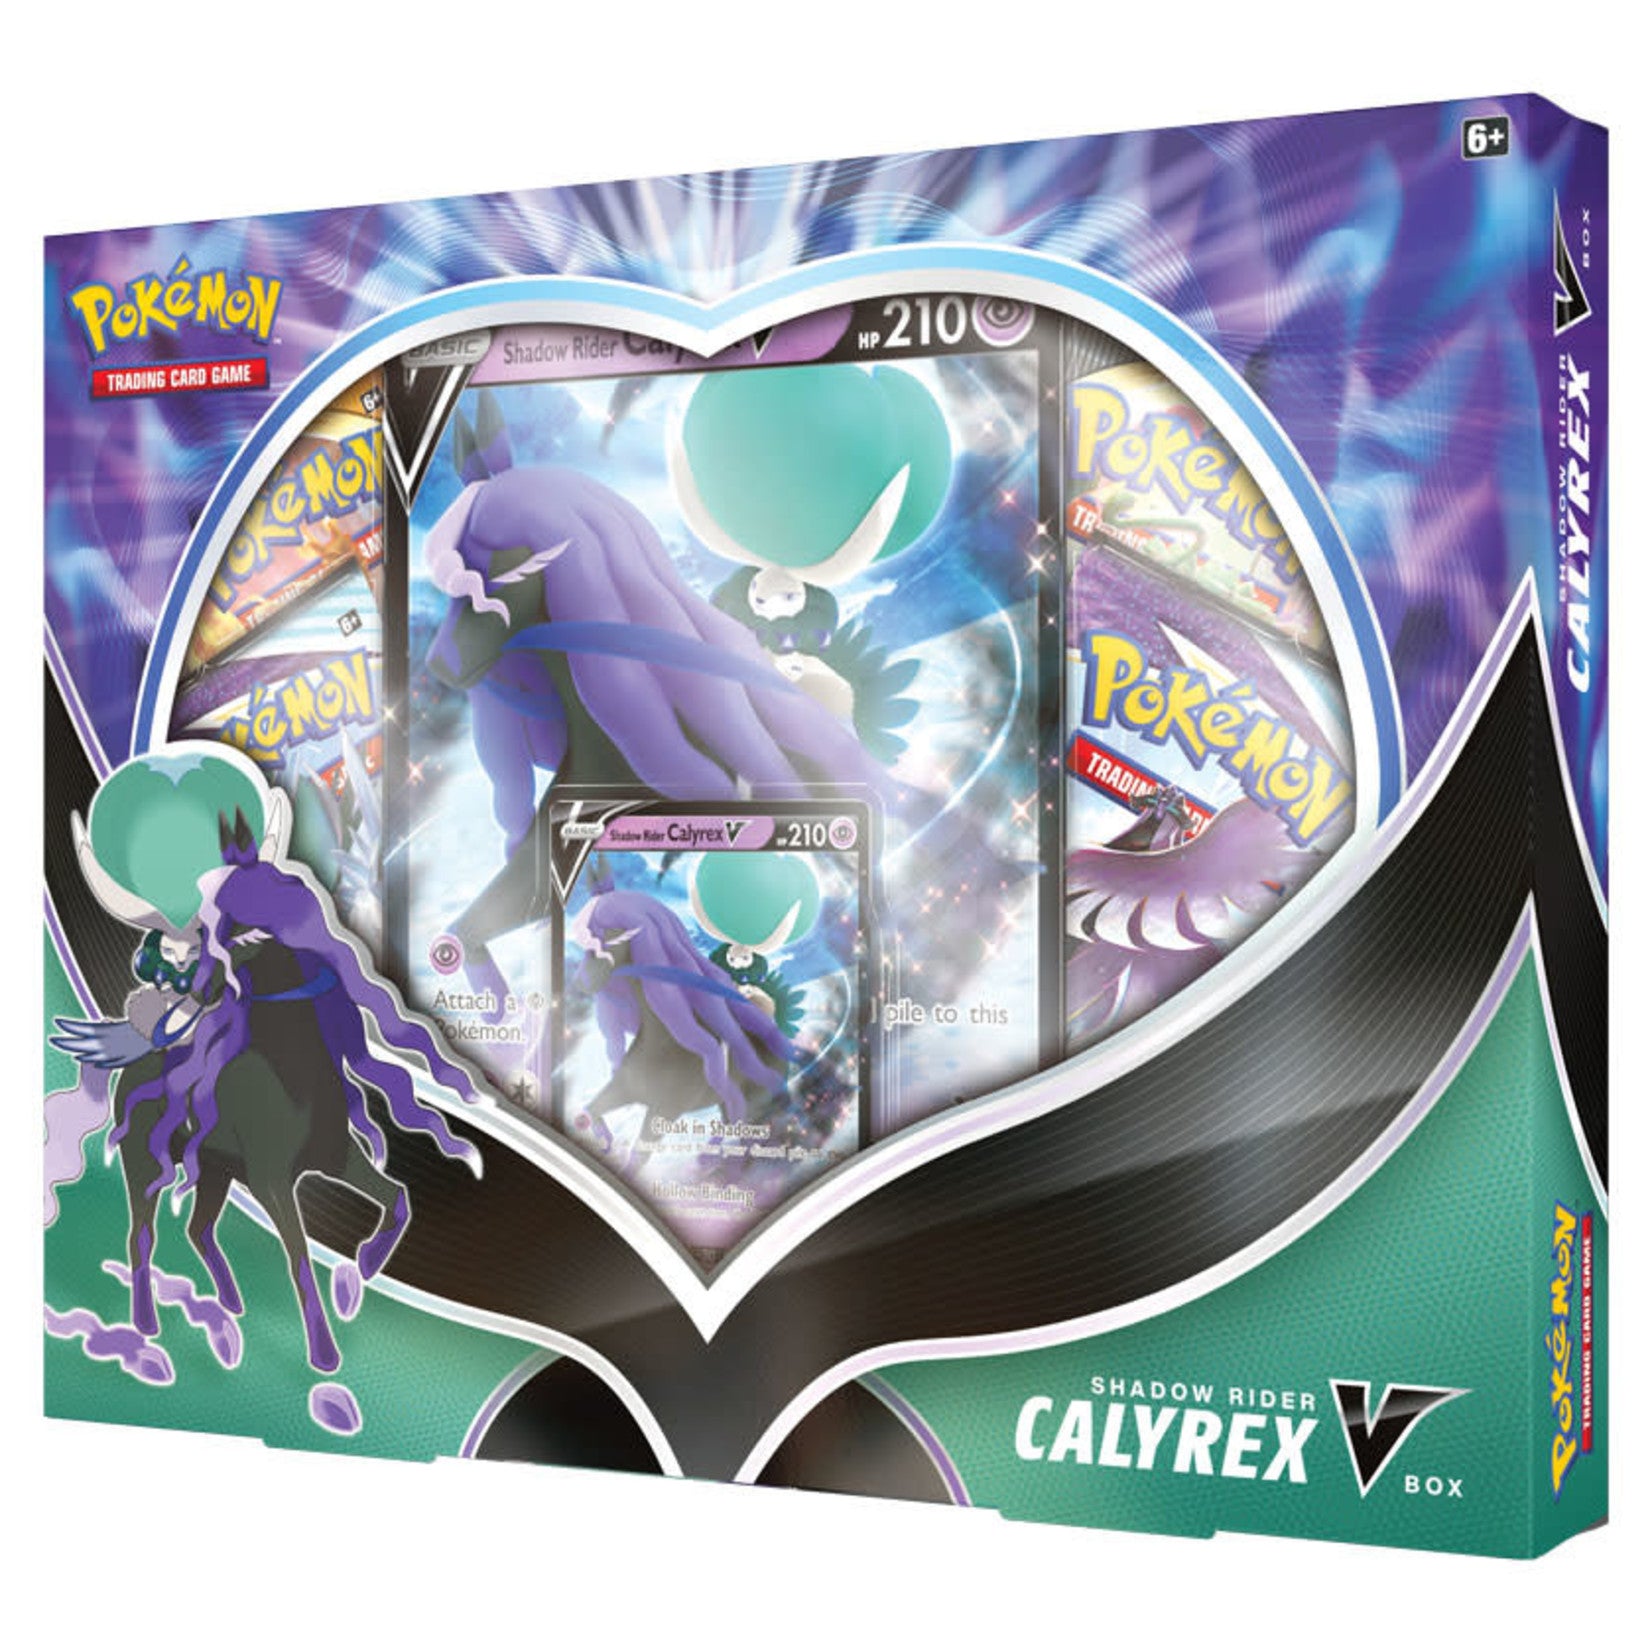 Pokémon TCG: Ice Rider Calyrex V Box and Pokémon TCG: Shadow Rider Calyrex V Box